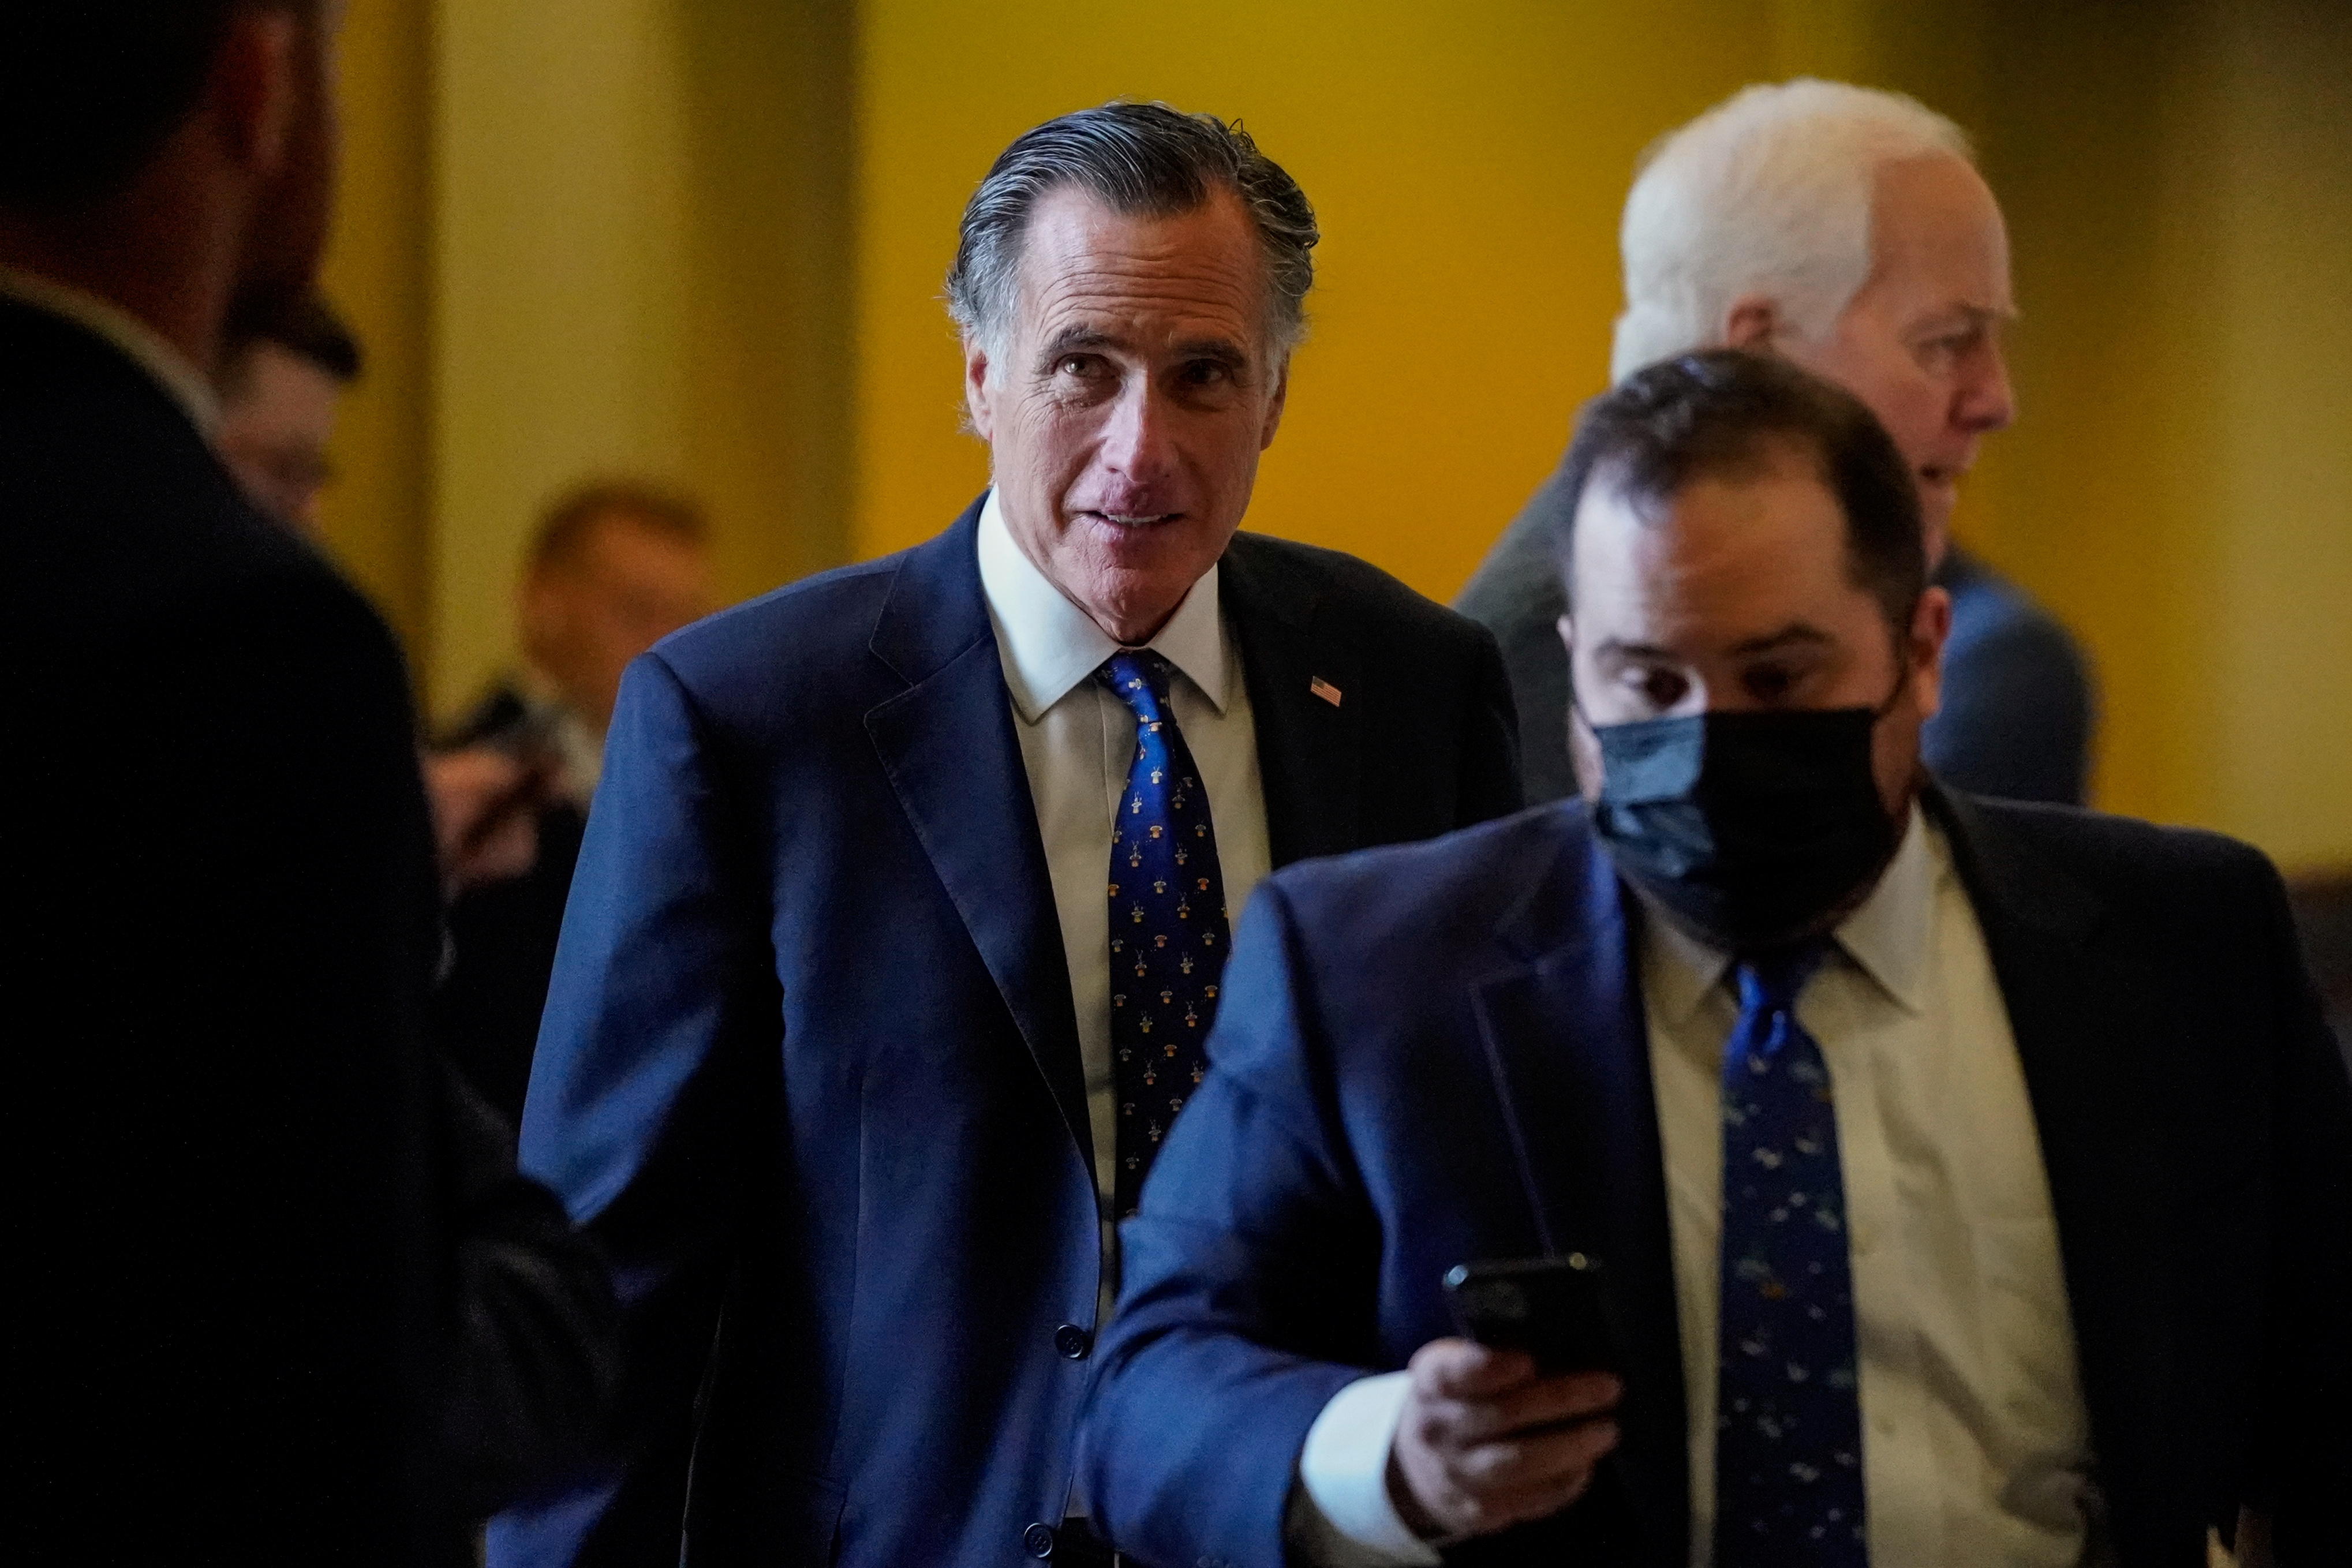 U.S. Senator Mitt Romney (R-UT) departs a meeting at the U.S. Capitol in Washington